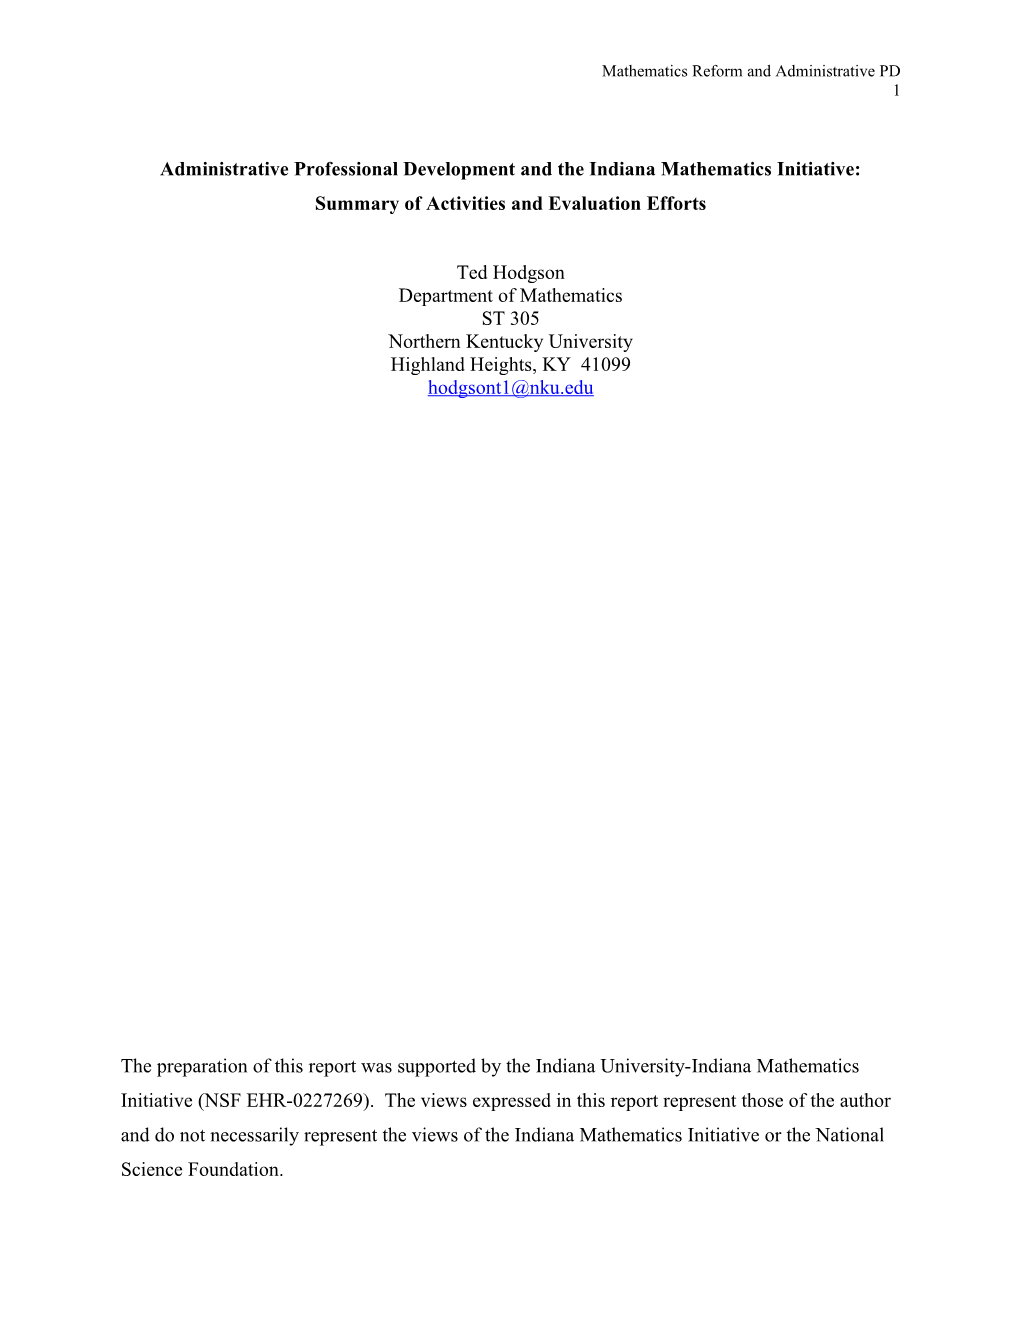 Administrative Professional Development and Elementary Mathematics Reform